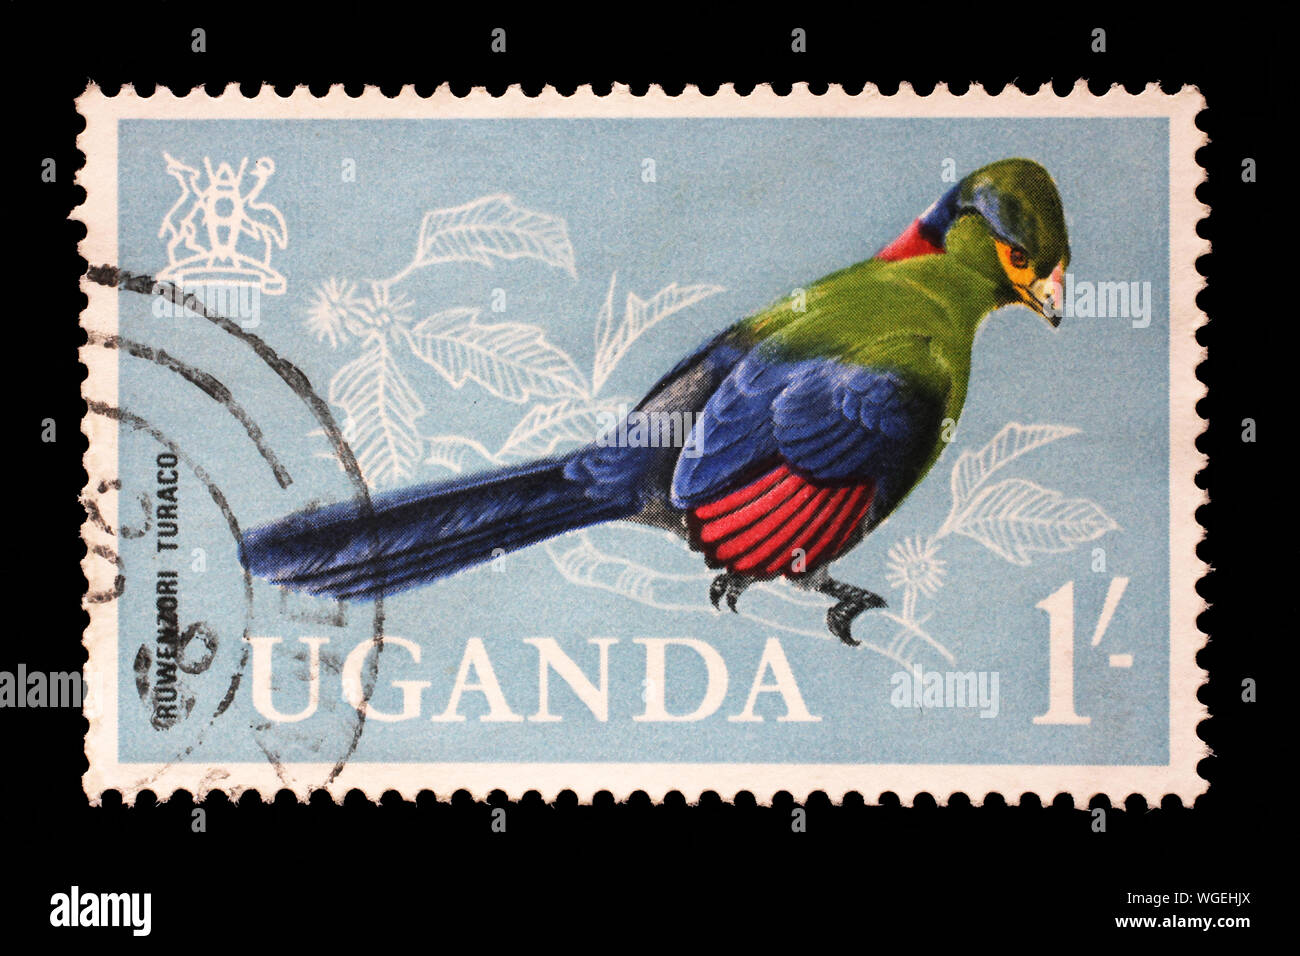 Stampigliatura rilasciata in Uganda mostra Ruwenzori's Turaco (Ruwenzorornis johnstoni), circa 1965. Foto Stock